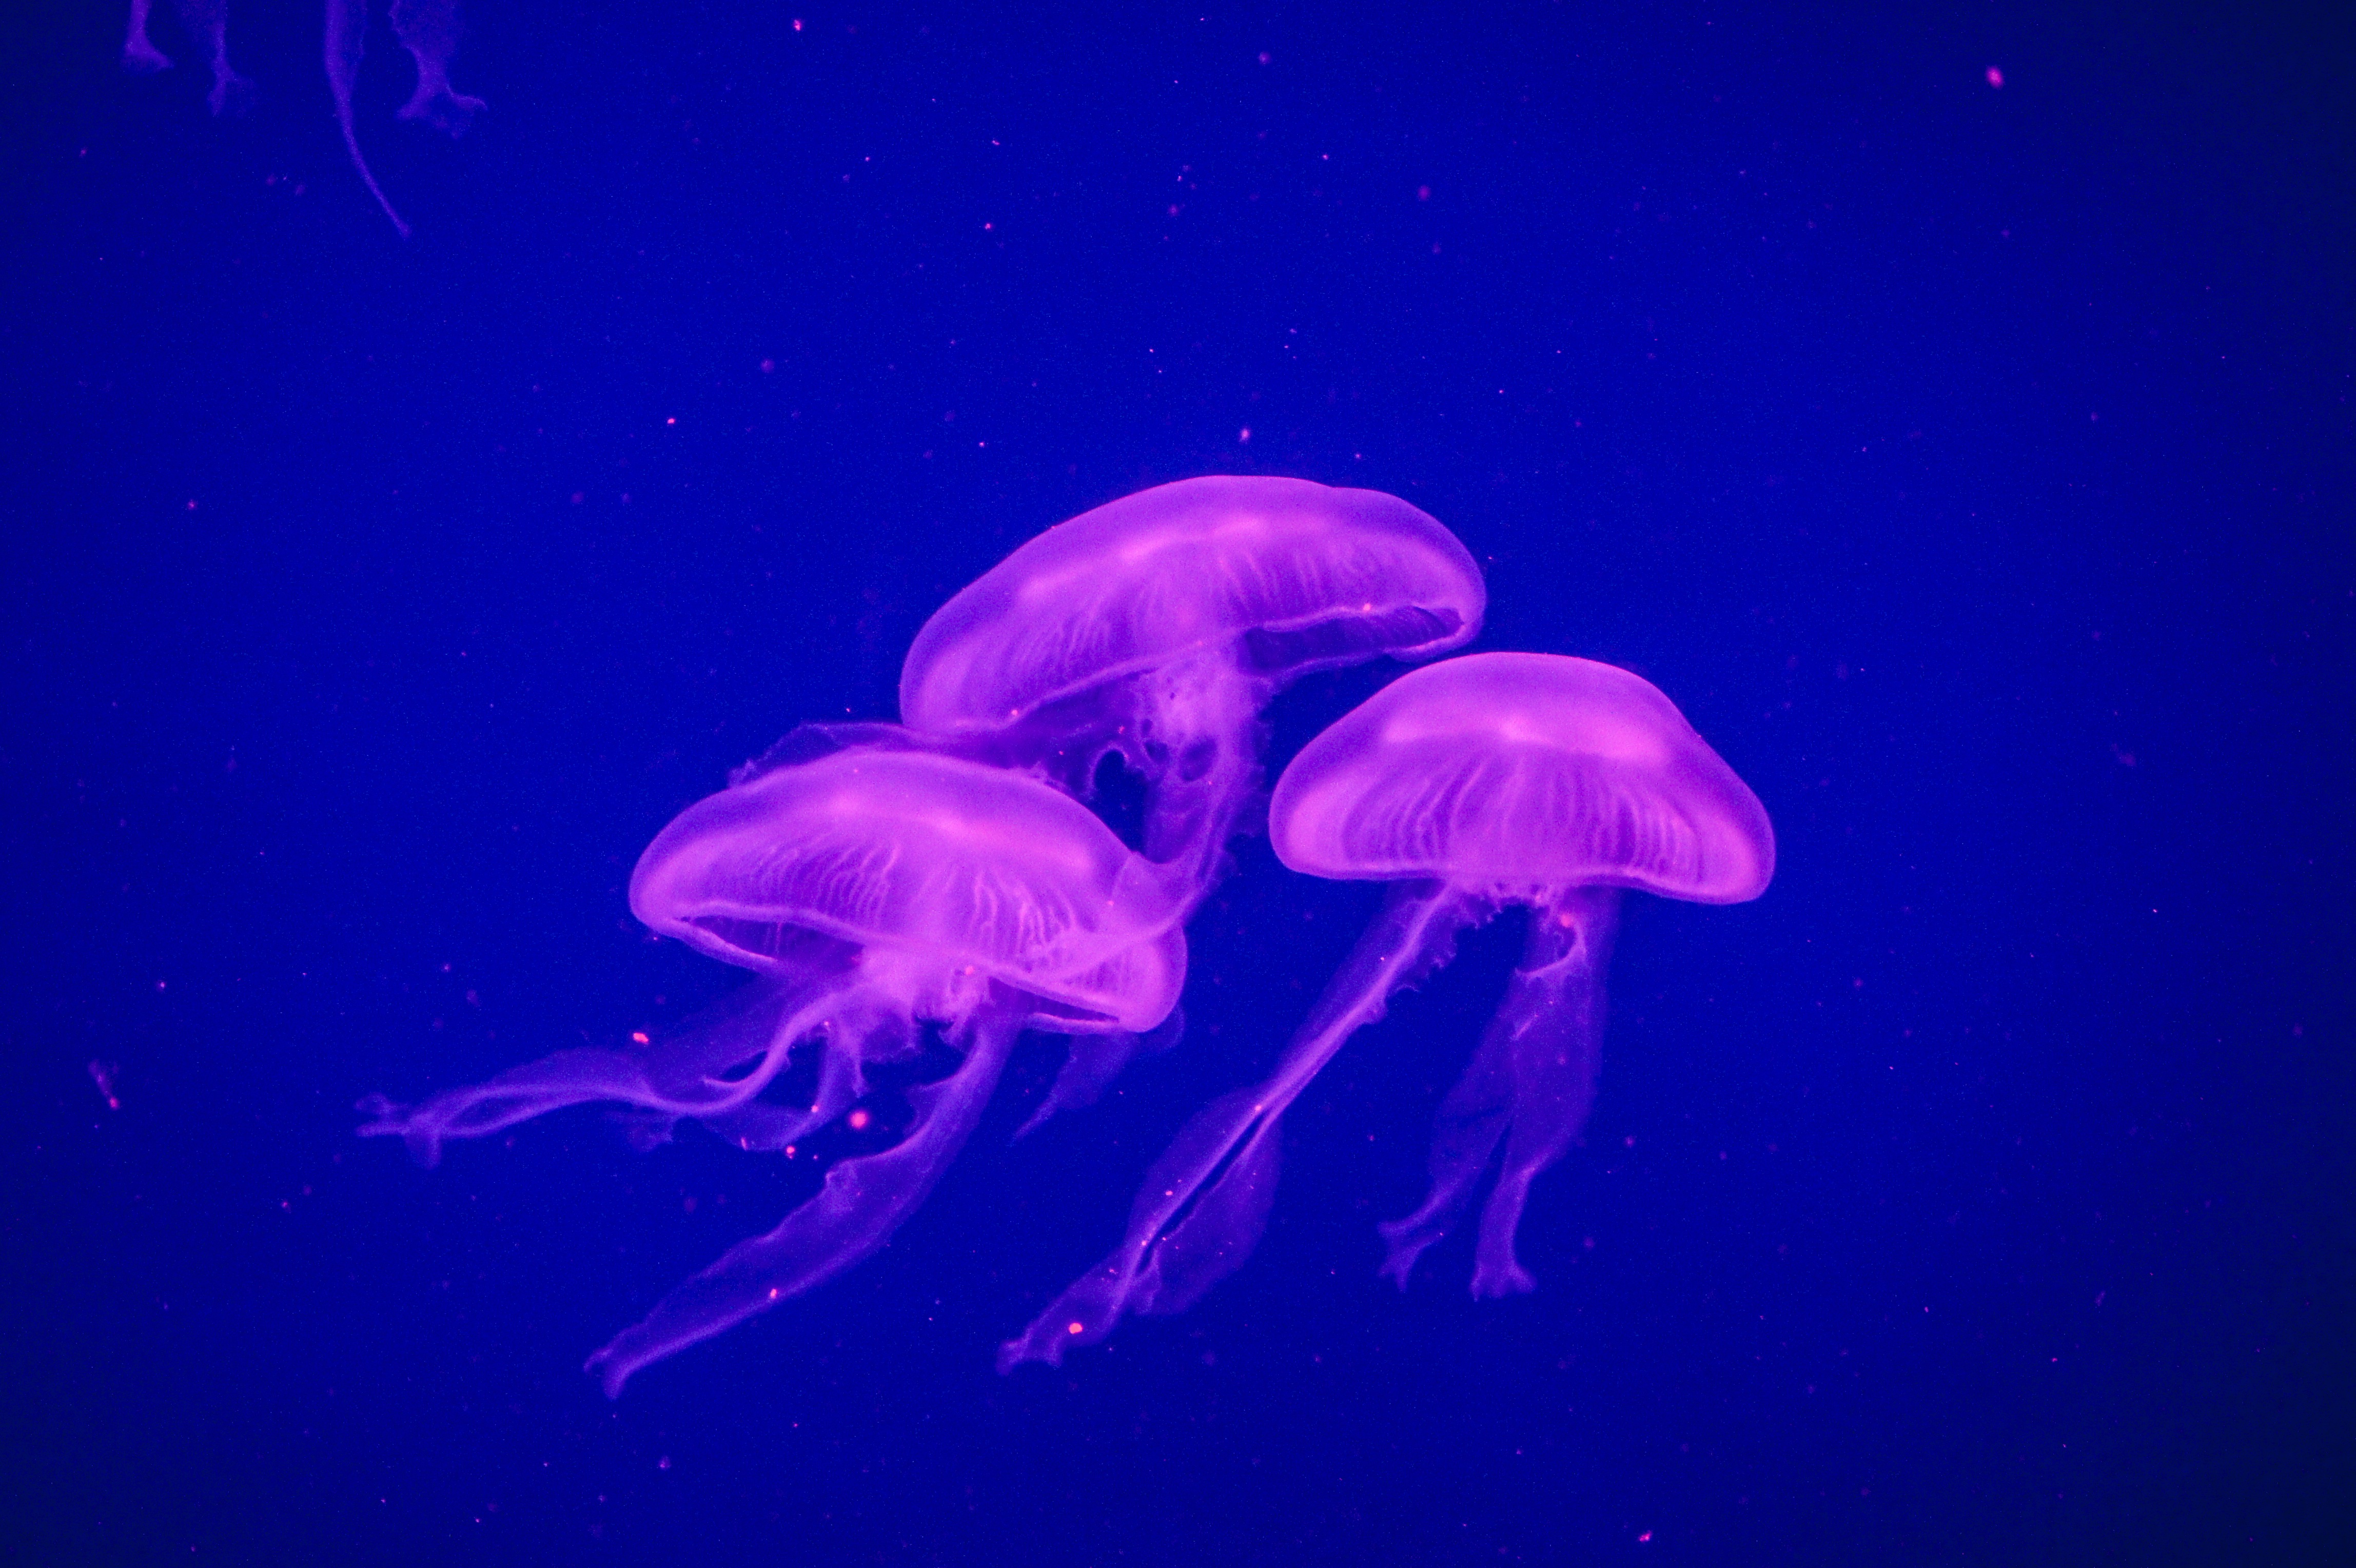 Blue Jellyfish Purple Sea Life Underwater 4592x3056